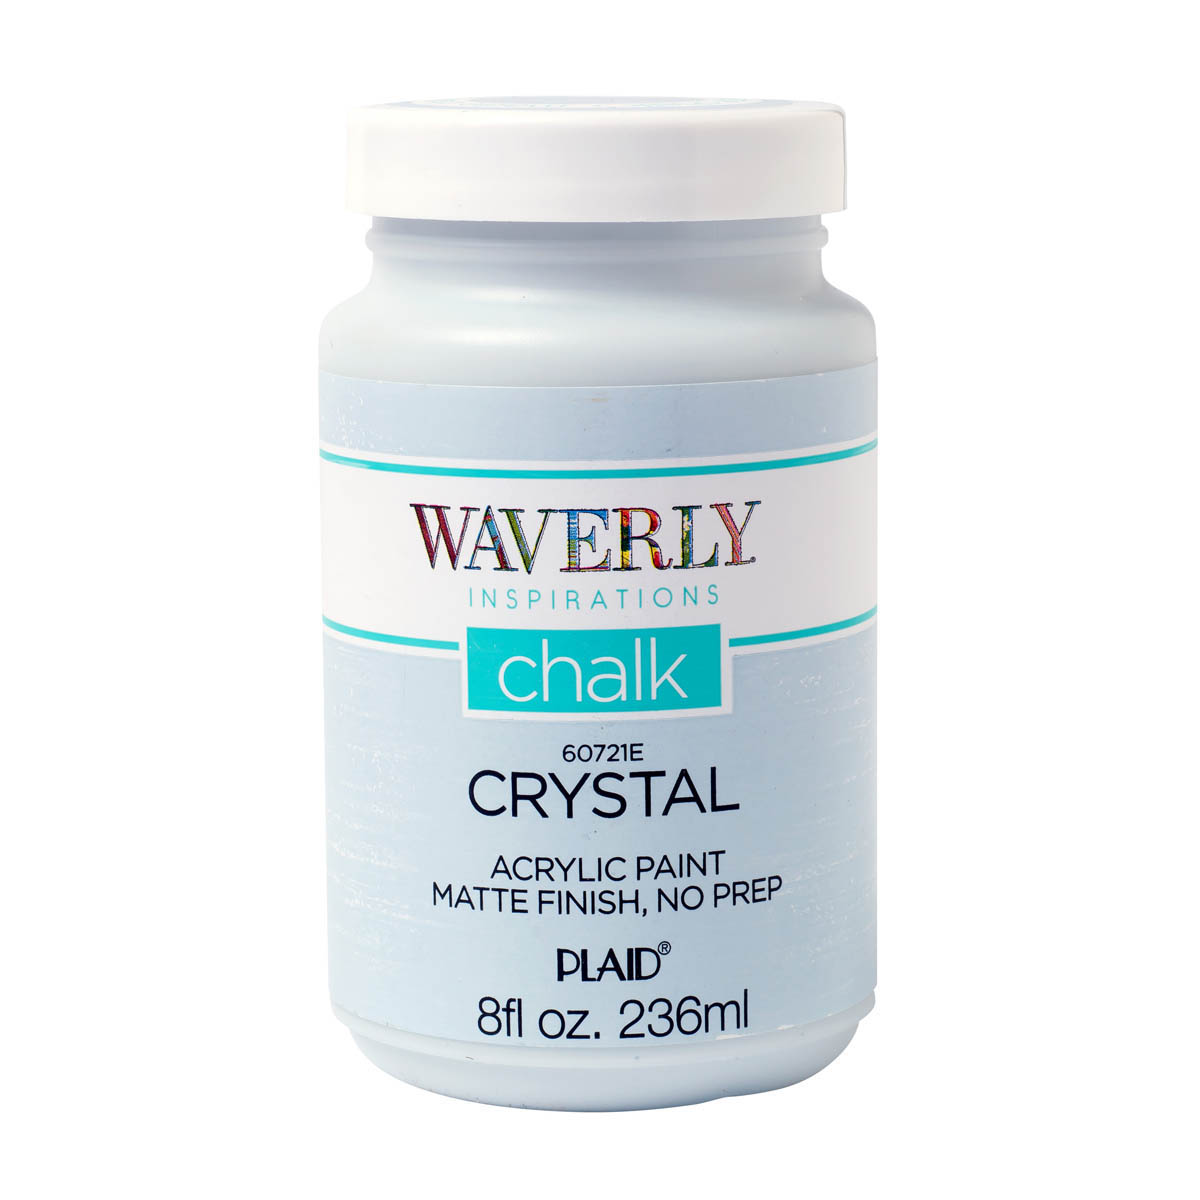 Waverly ® Inspirations Chalk Acrylic Paint - Crystal, 8 oz. - 60721E